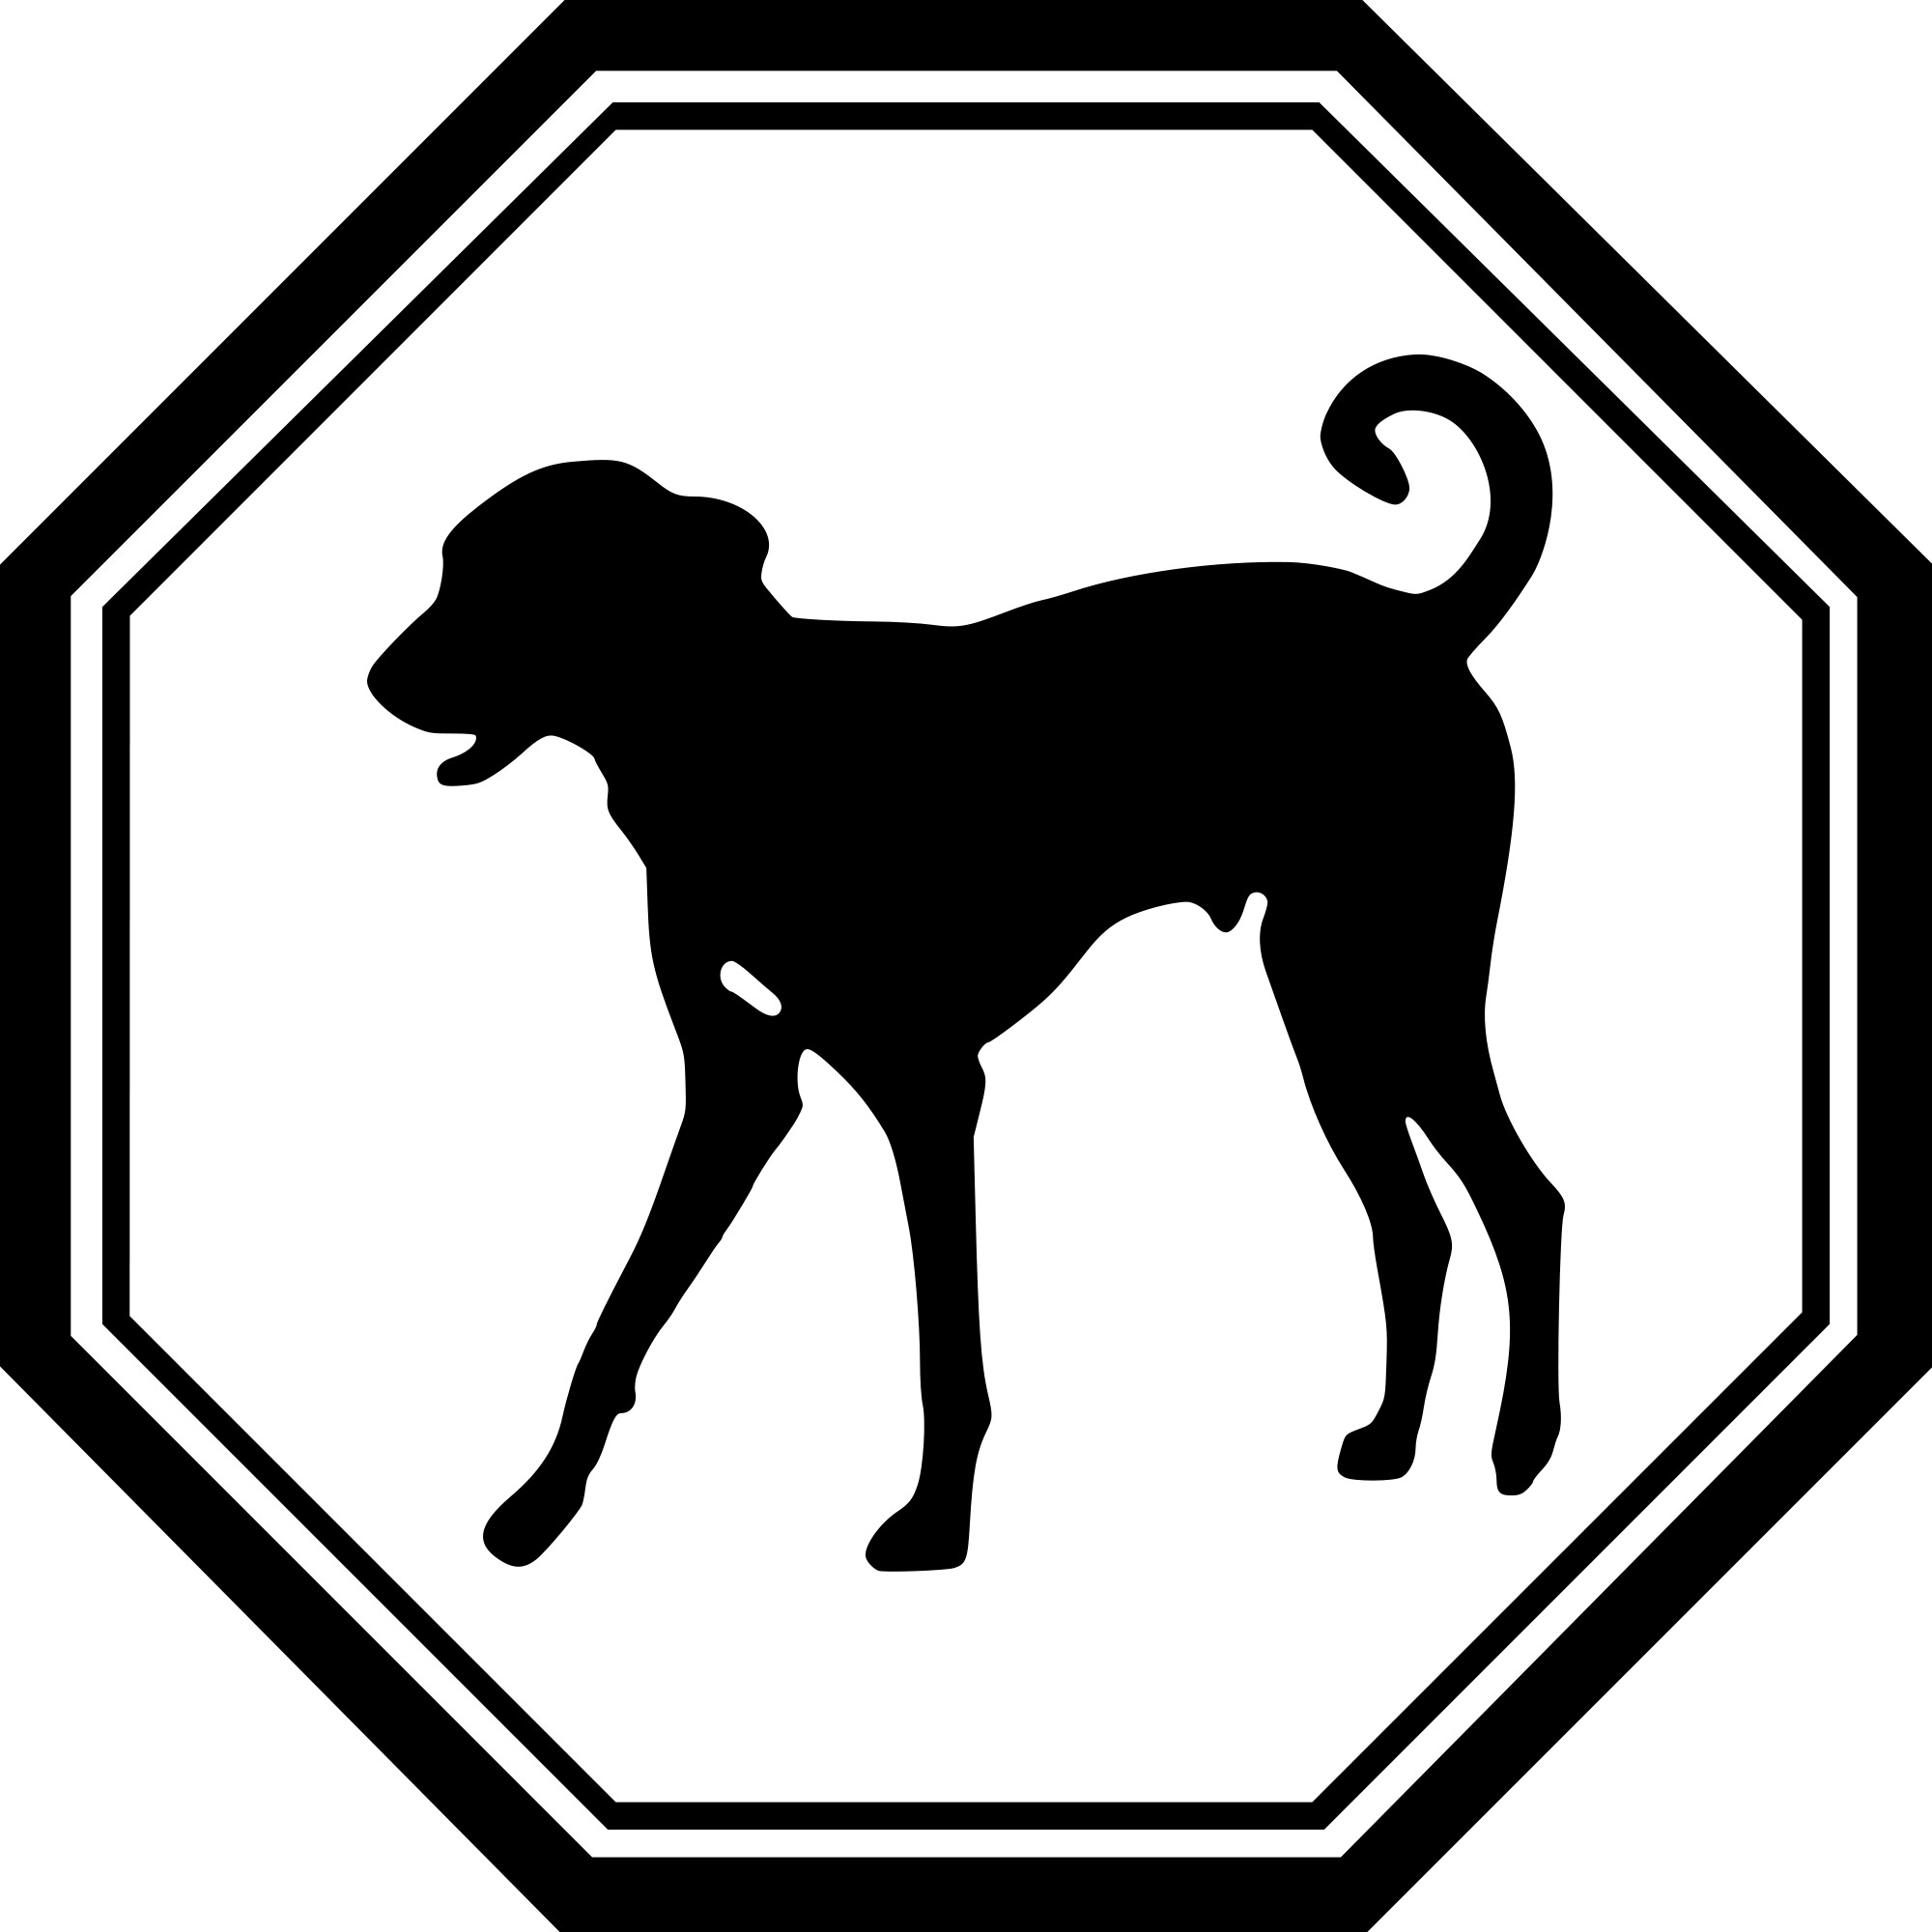 Chinese Horoscope Dog Sign Clipart icons